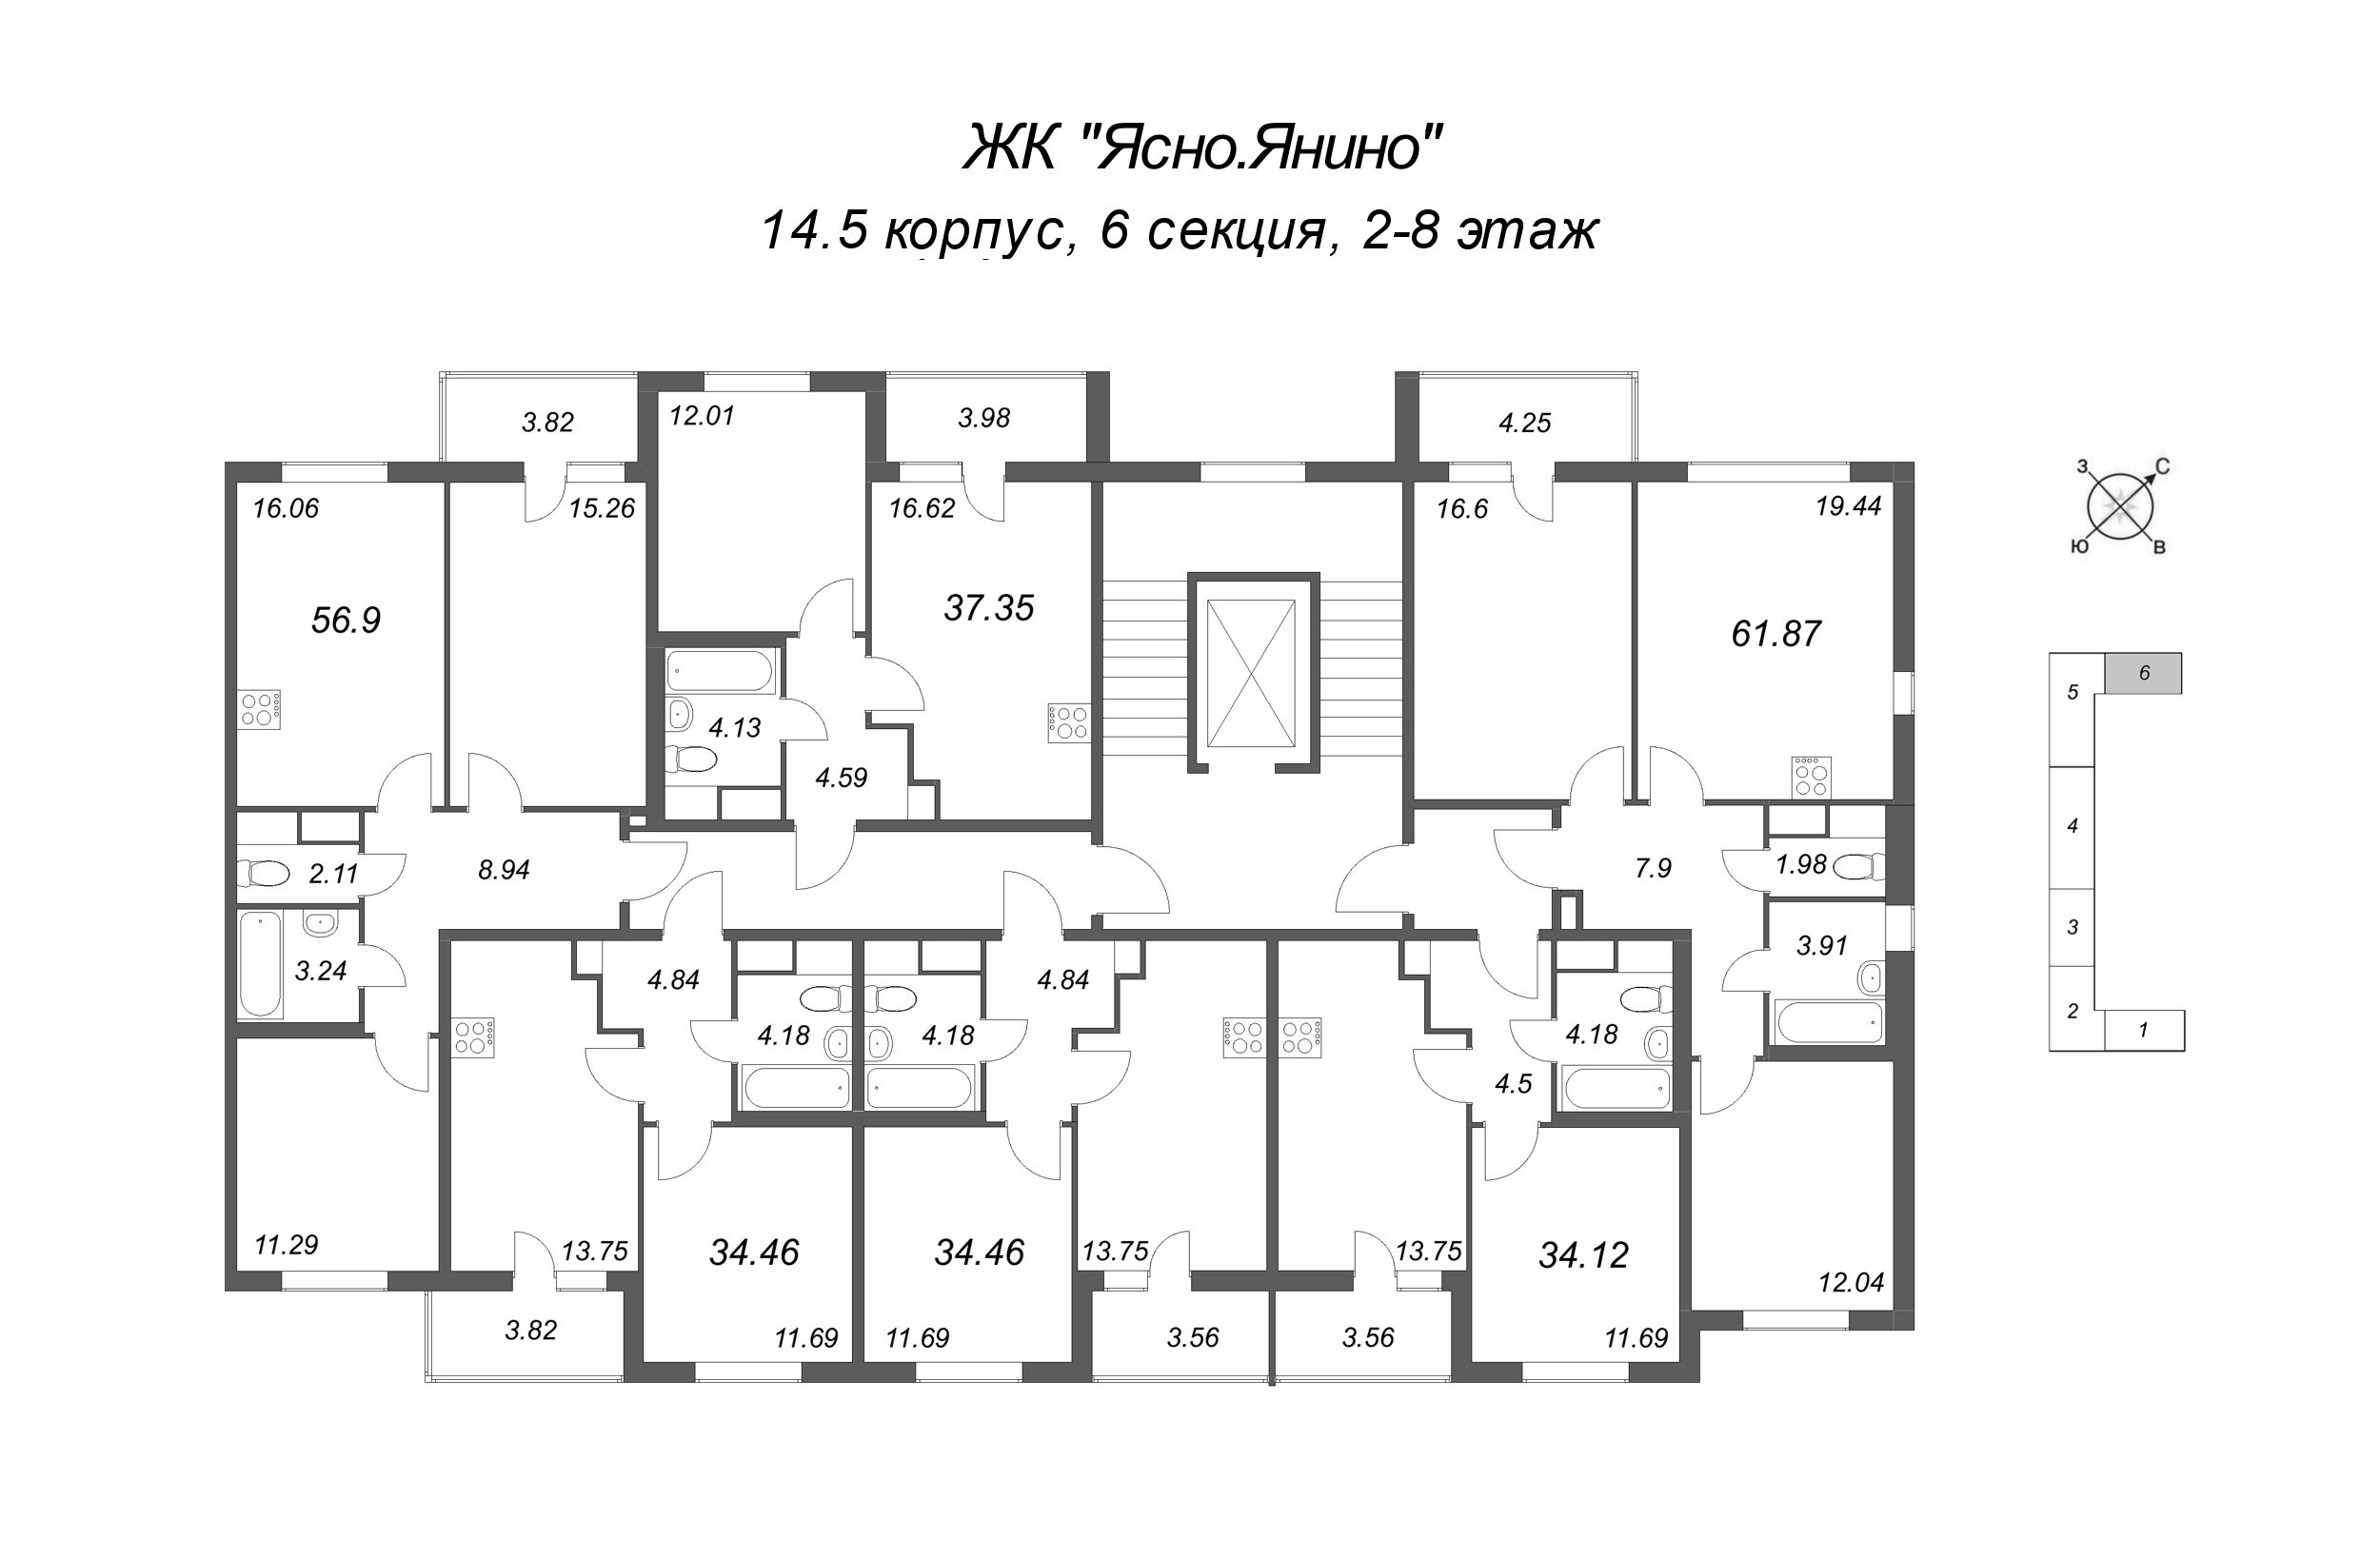 2-комнатная (Евро) квартира, 37.35 м² - планировка этажа